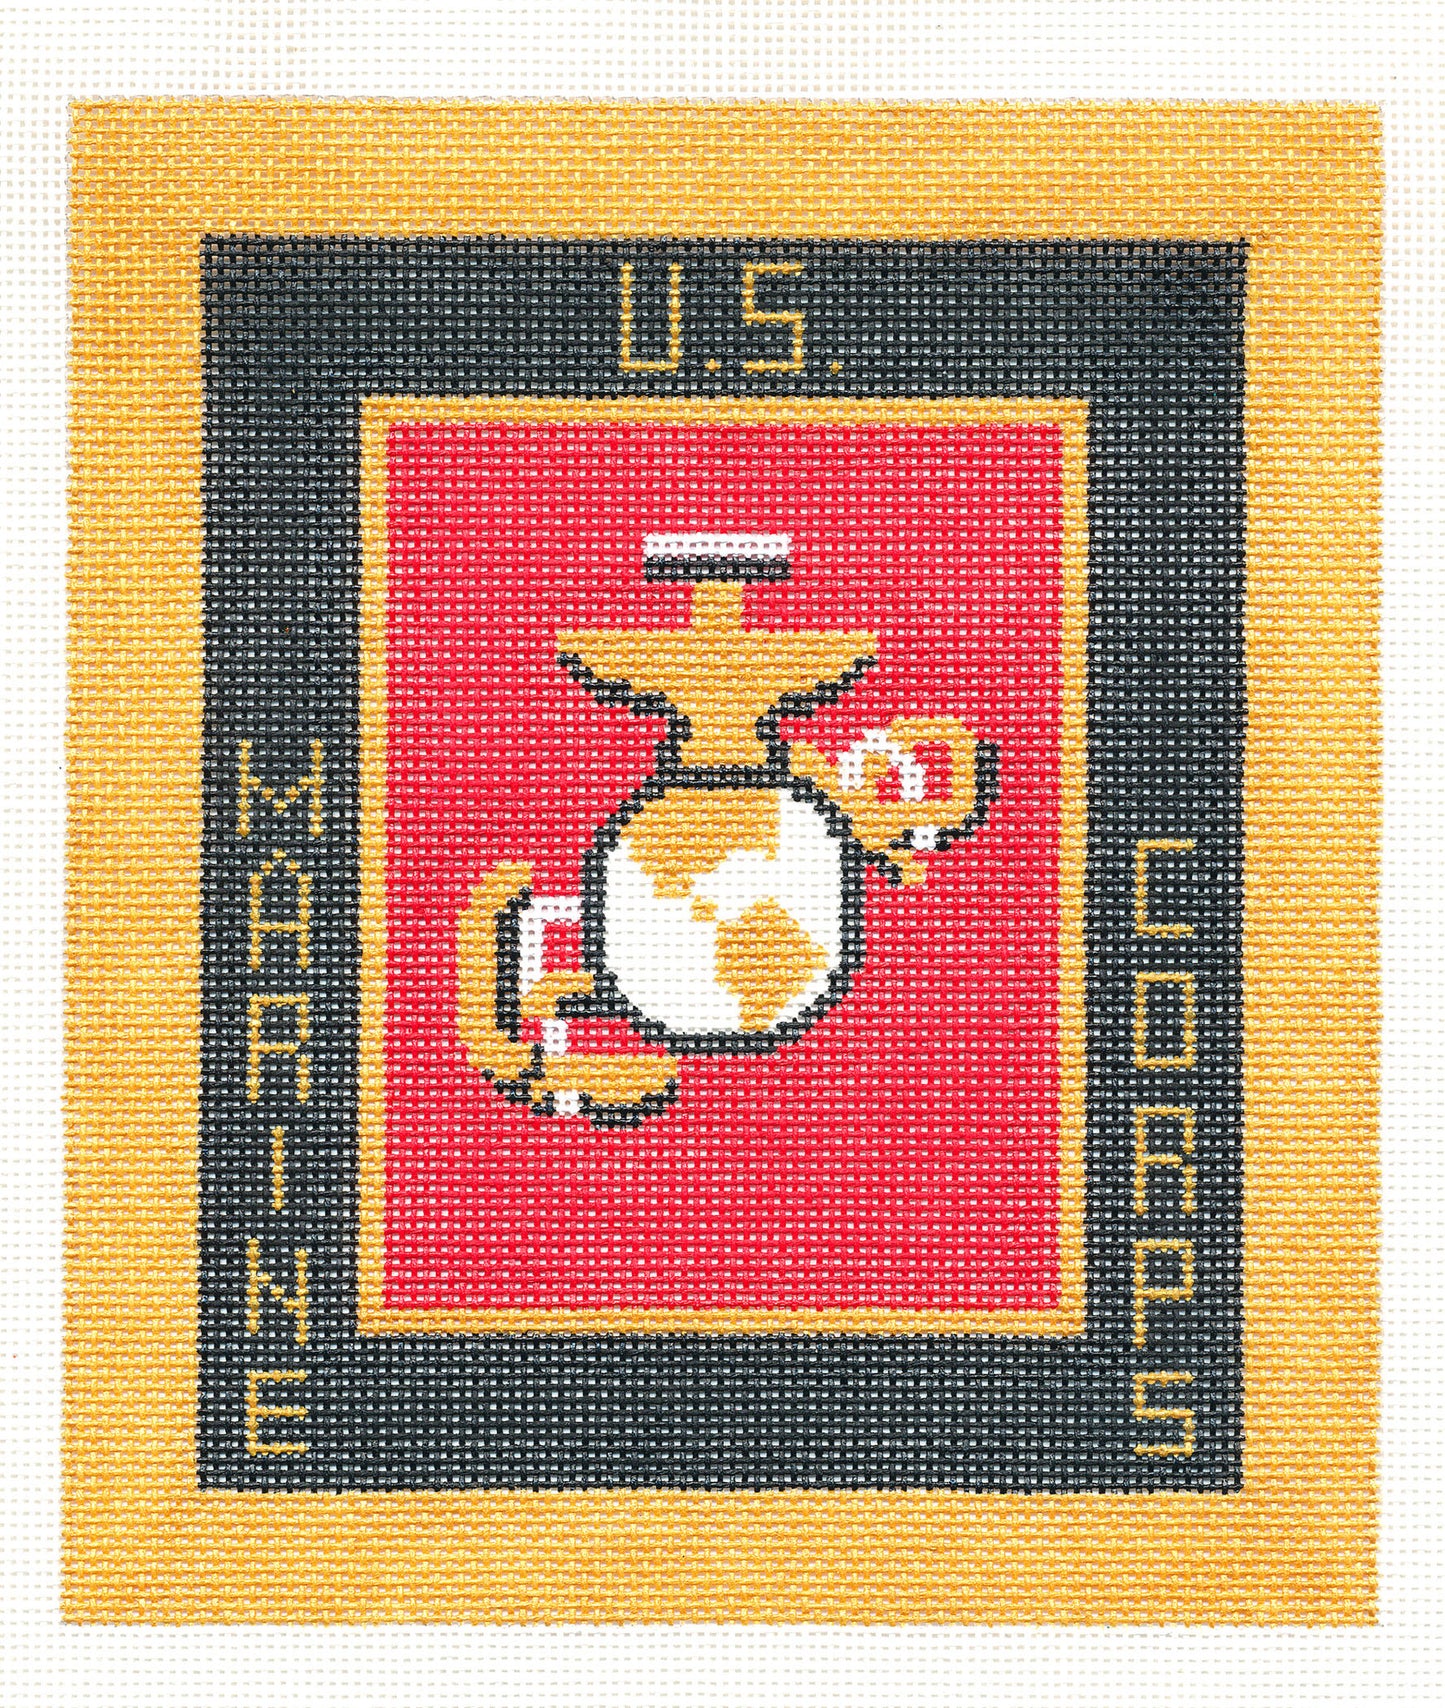 Military ~ U. S. MARINE CORPS Military 6"x7" handpainted 18 mesh Needlepoint Canvas LEE Needle Art